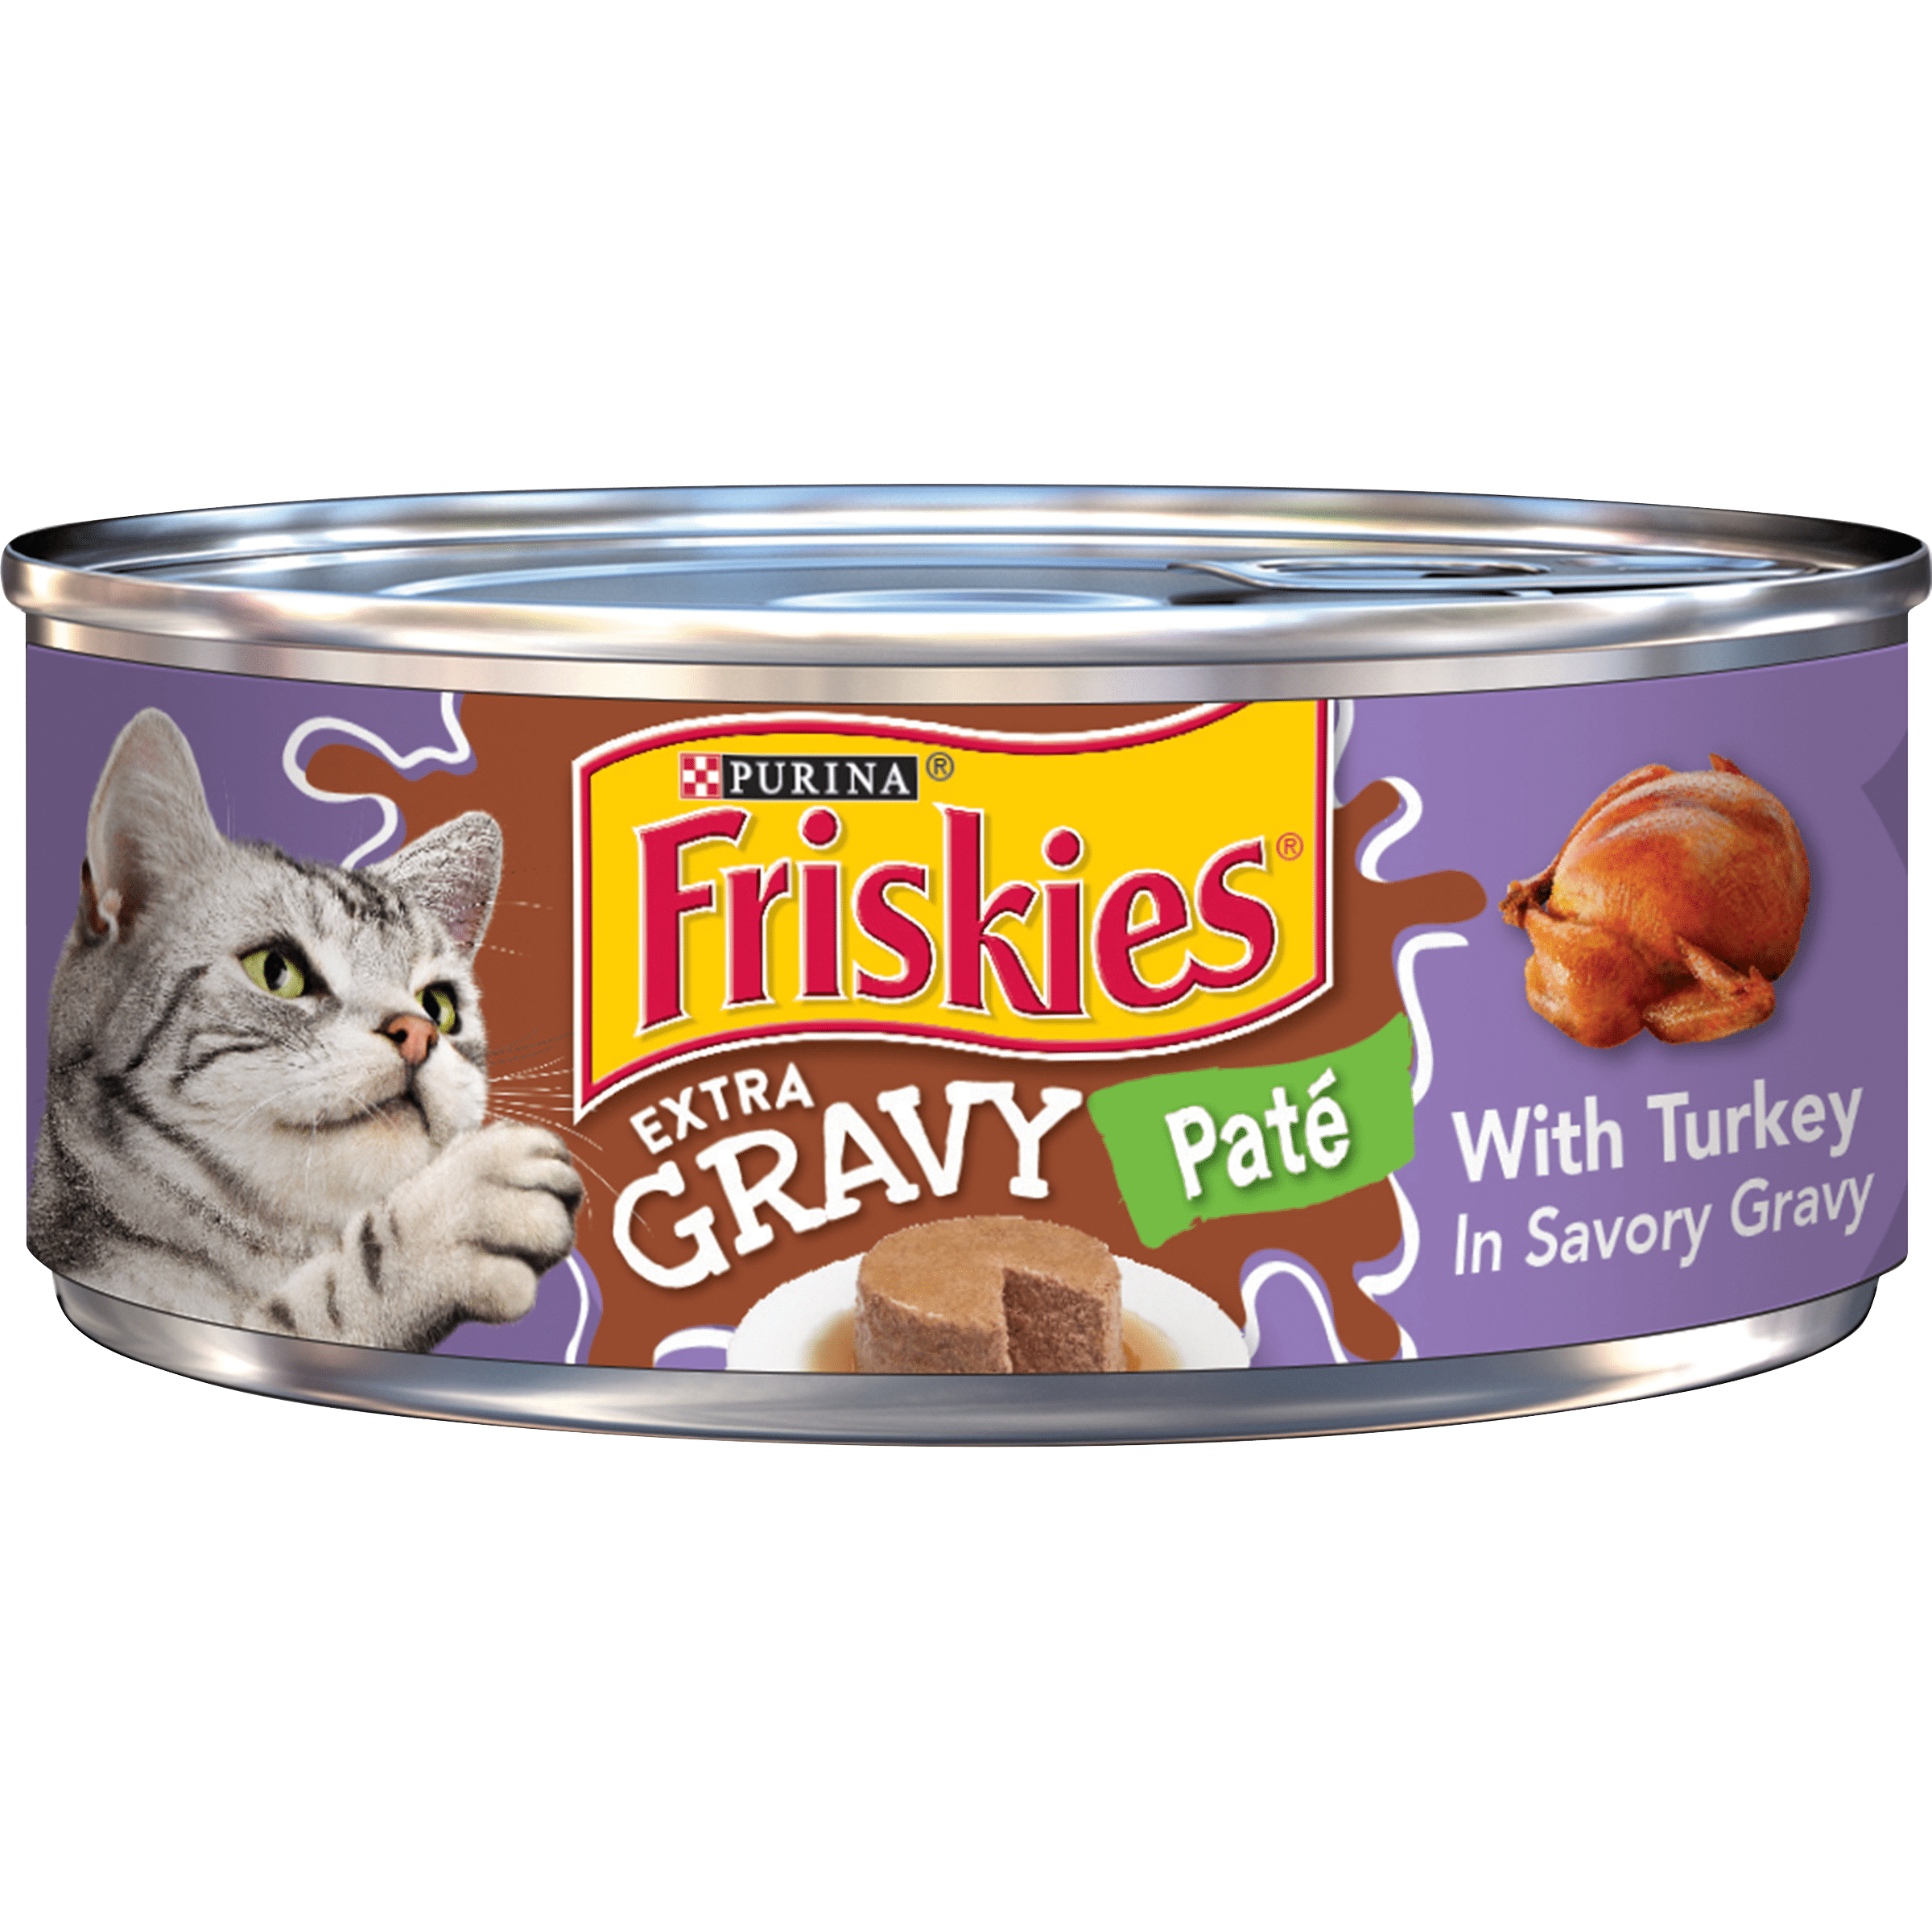 Friskies Gravy Pate Wet Cat Food, Extra Gravy Pate With Turkey in